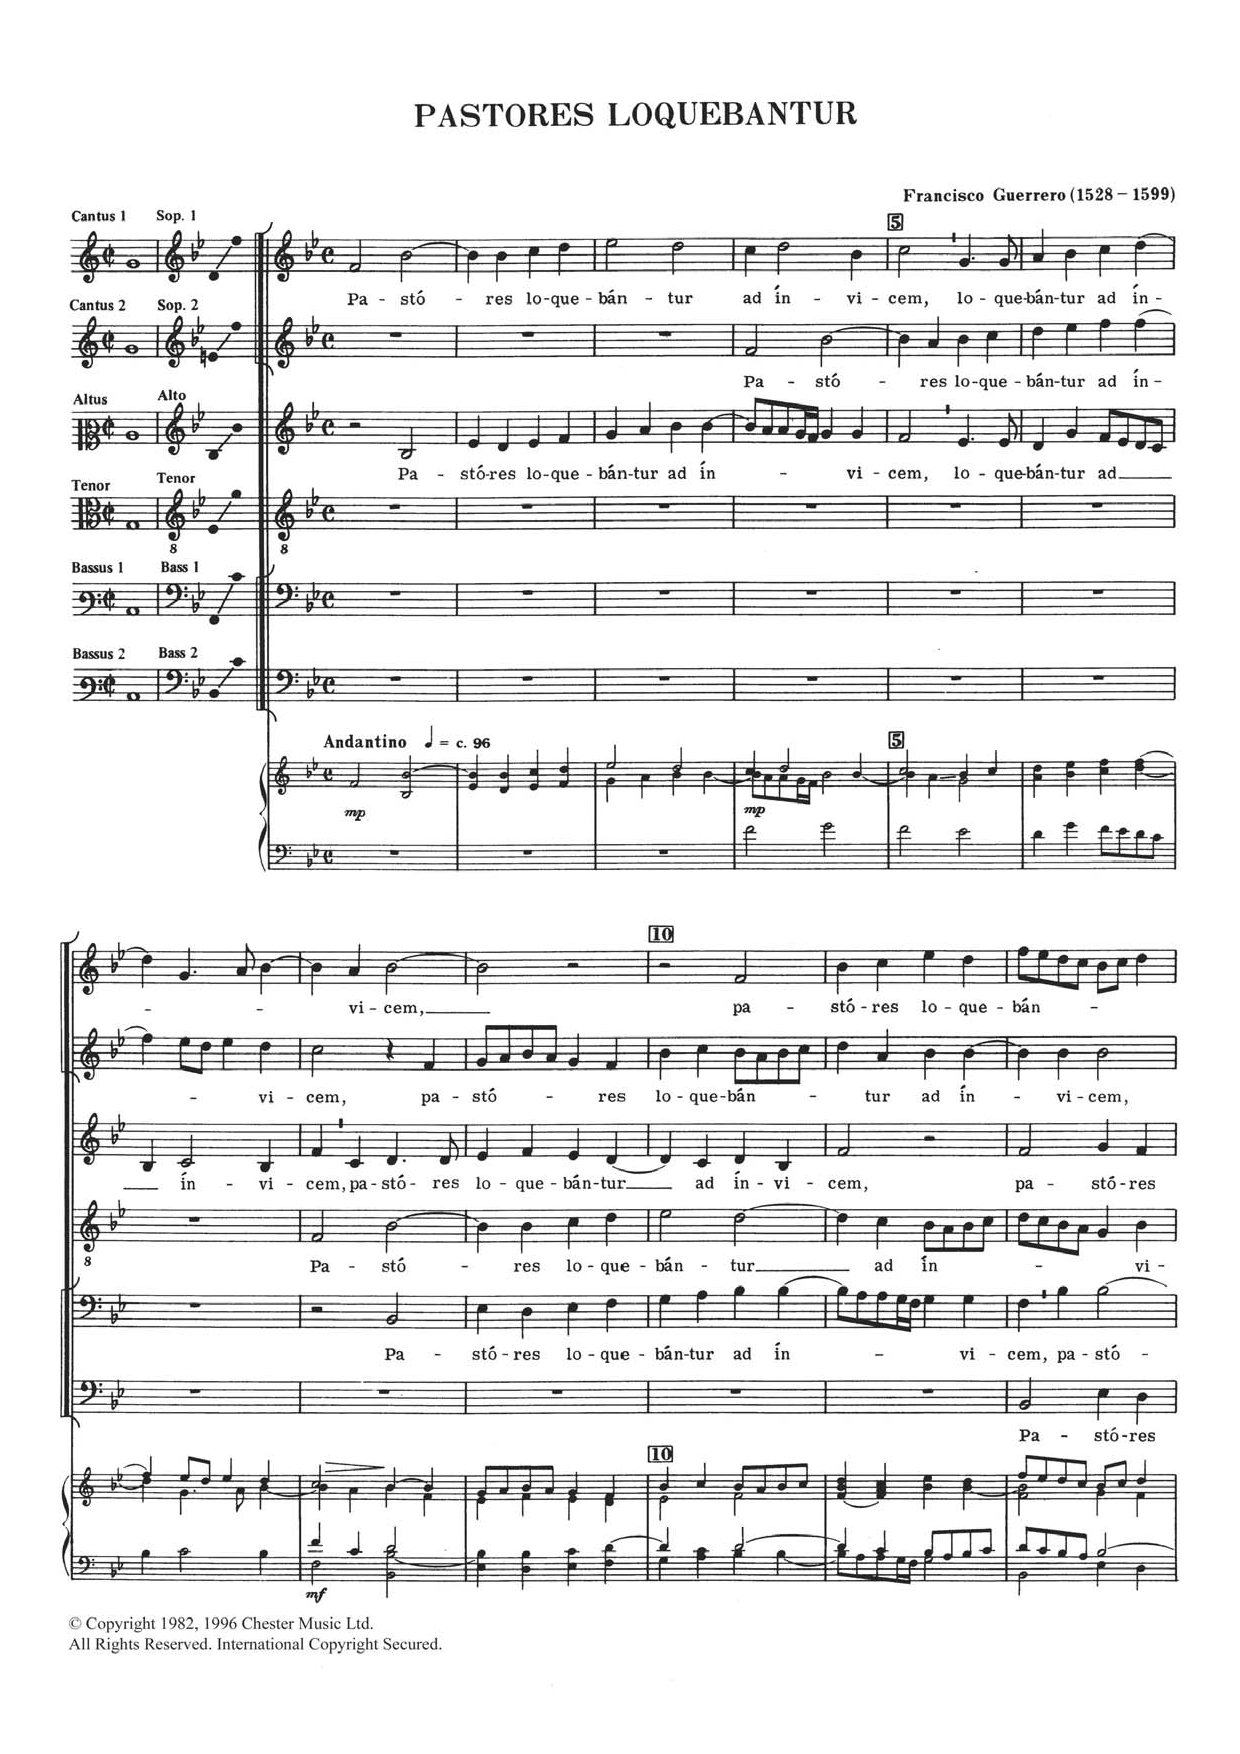 Francisco Guerrero Pastores Loquebantur Sheet Music Notes & Chords for Choral SAATB - Download or Print PDF